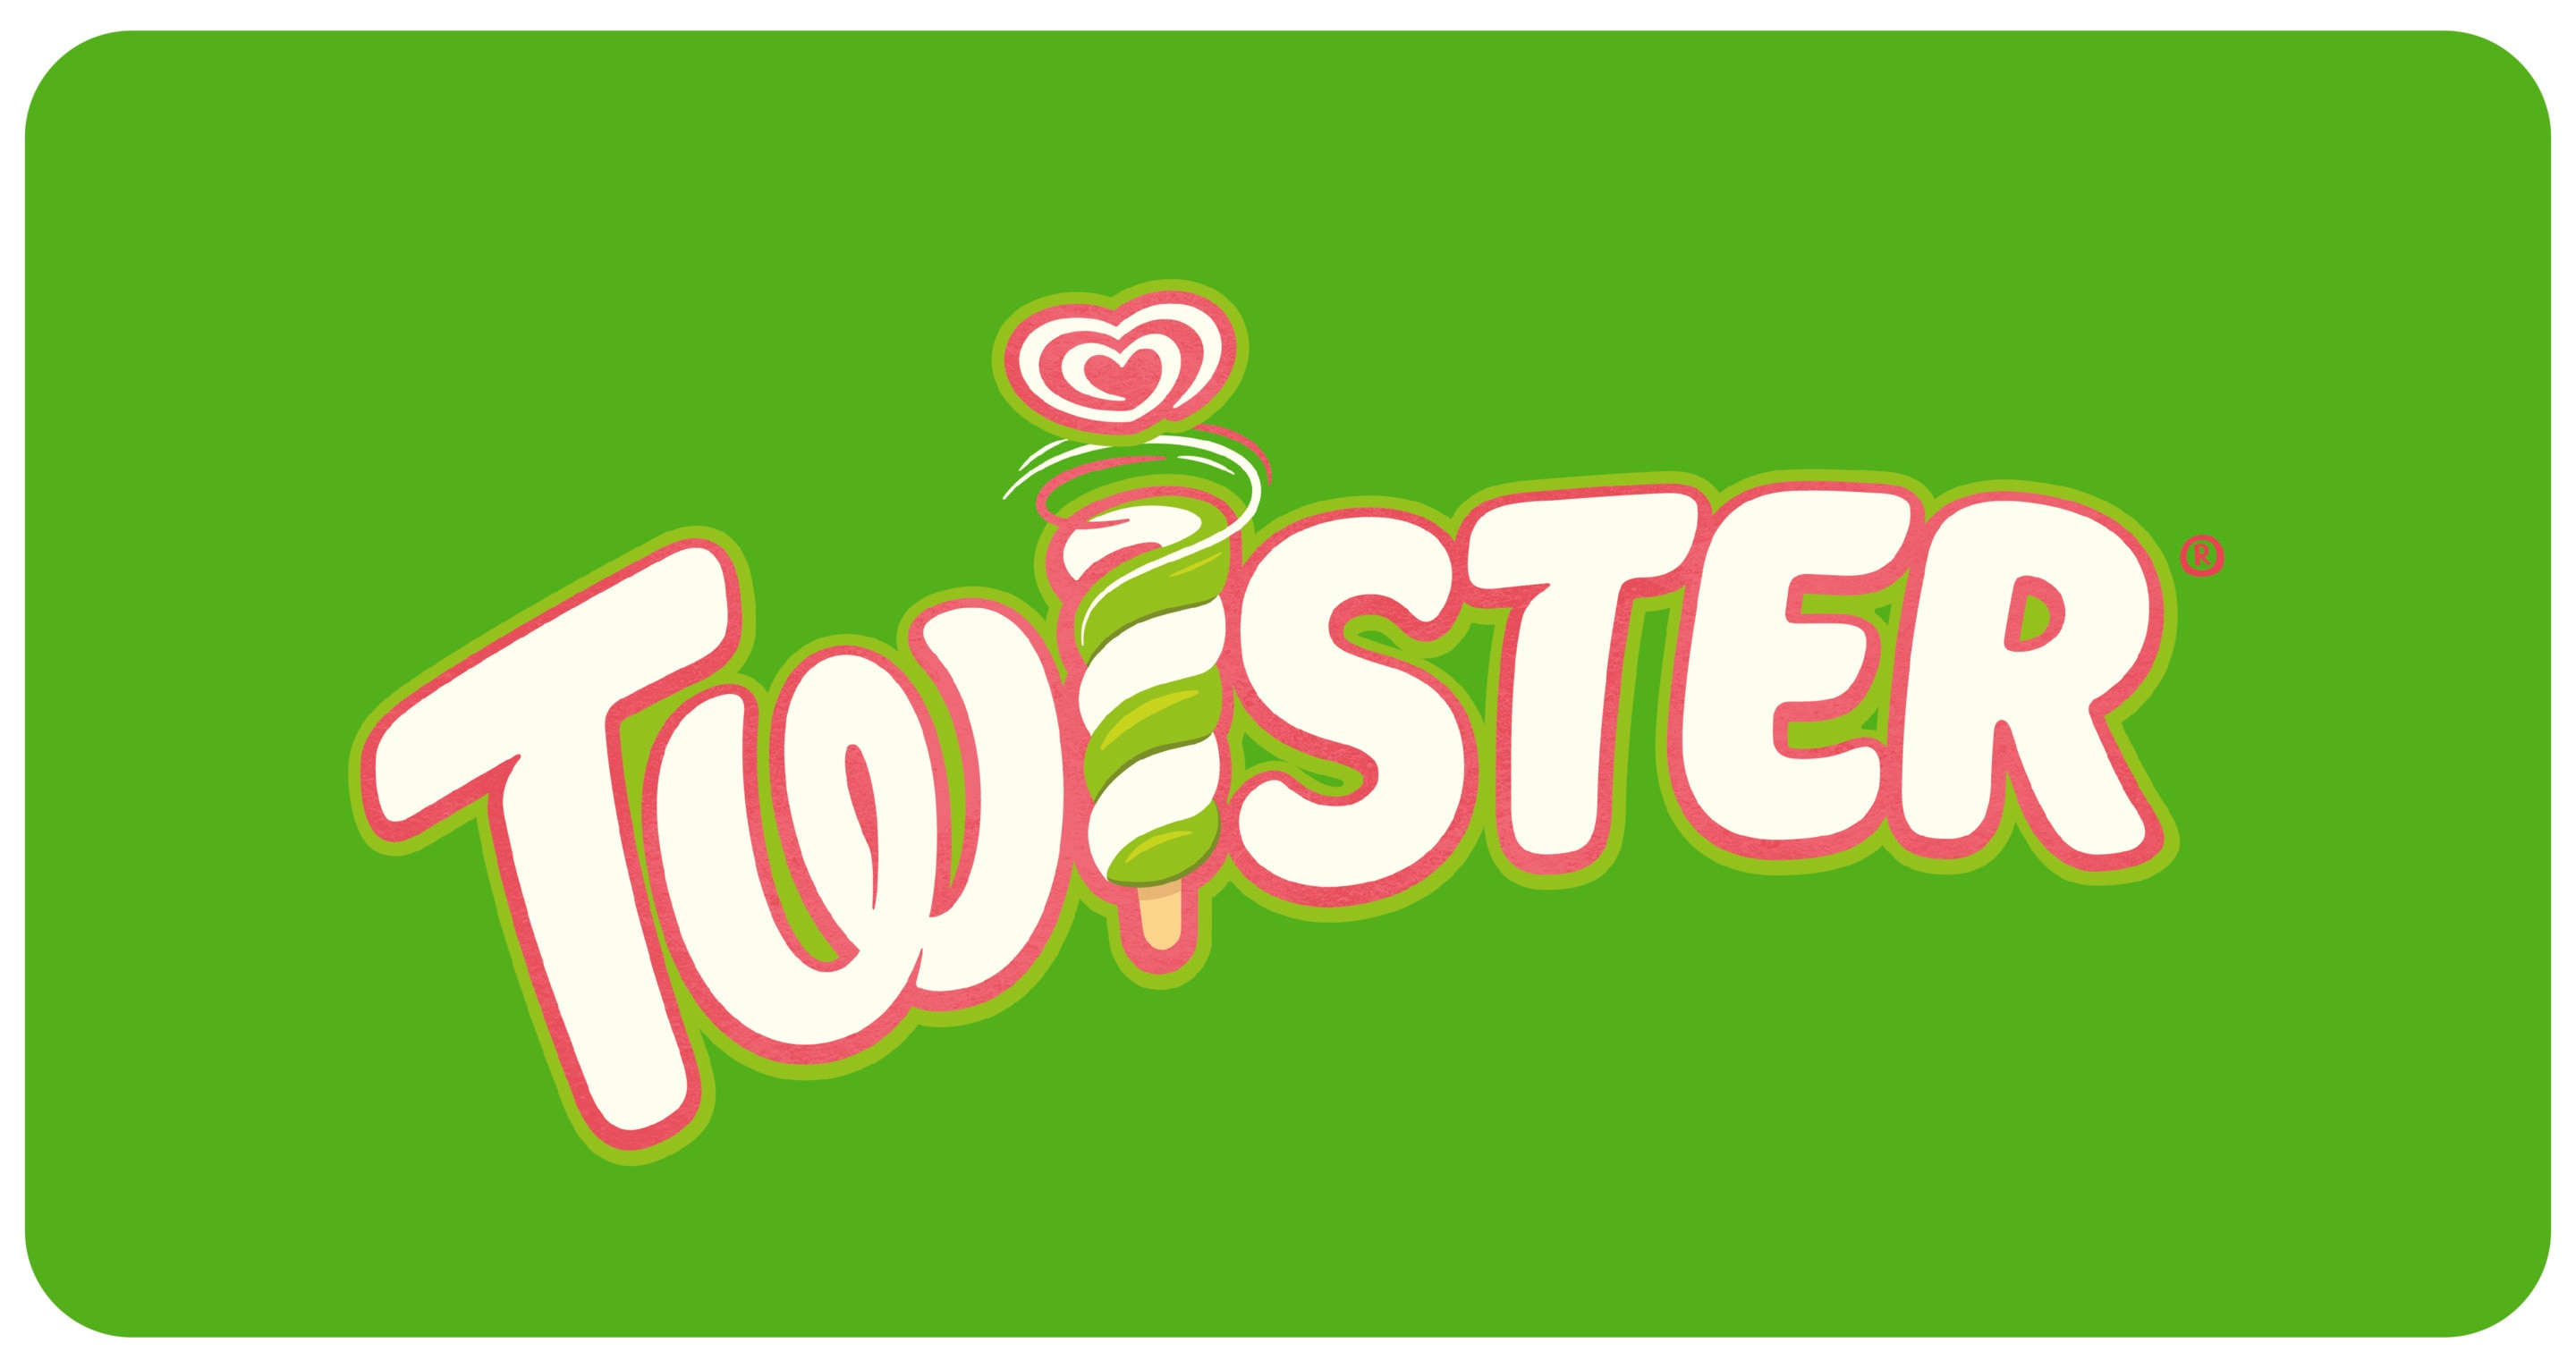 Twister Logo